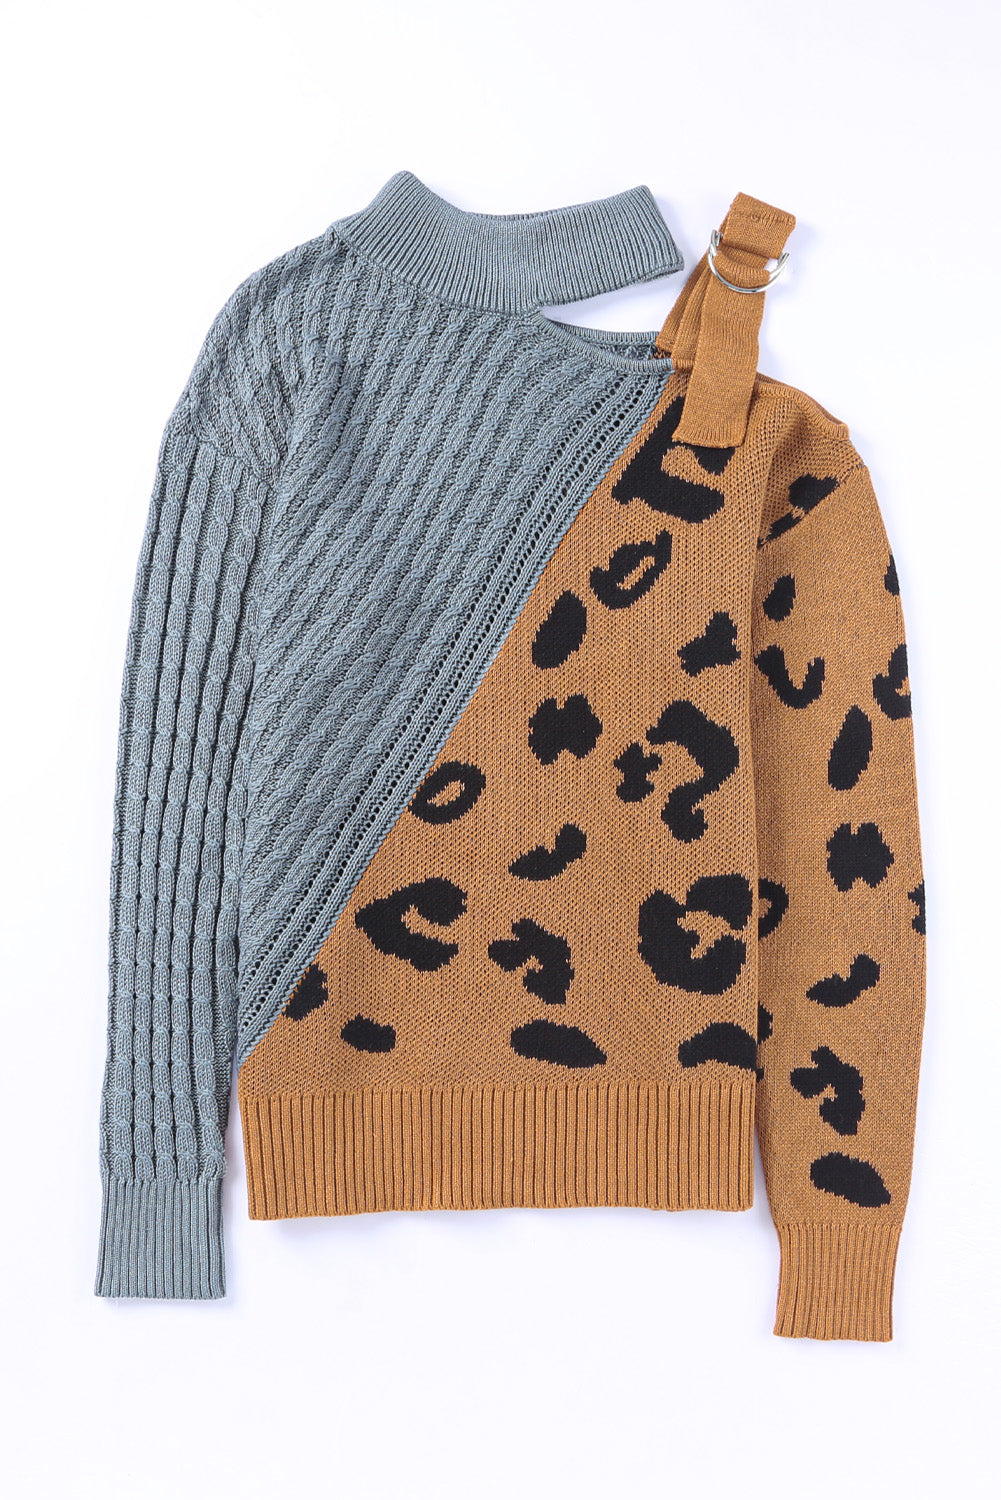 Leopard Block Turtleneck Sweater - Cloudy Blue / XL Apparel & Accessories Wynter 4 All Seasons